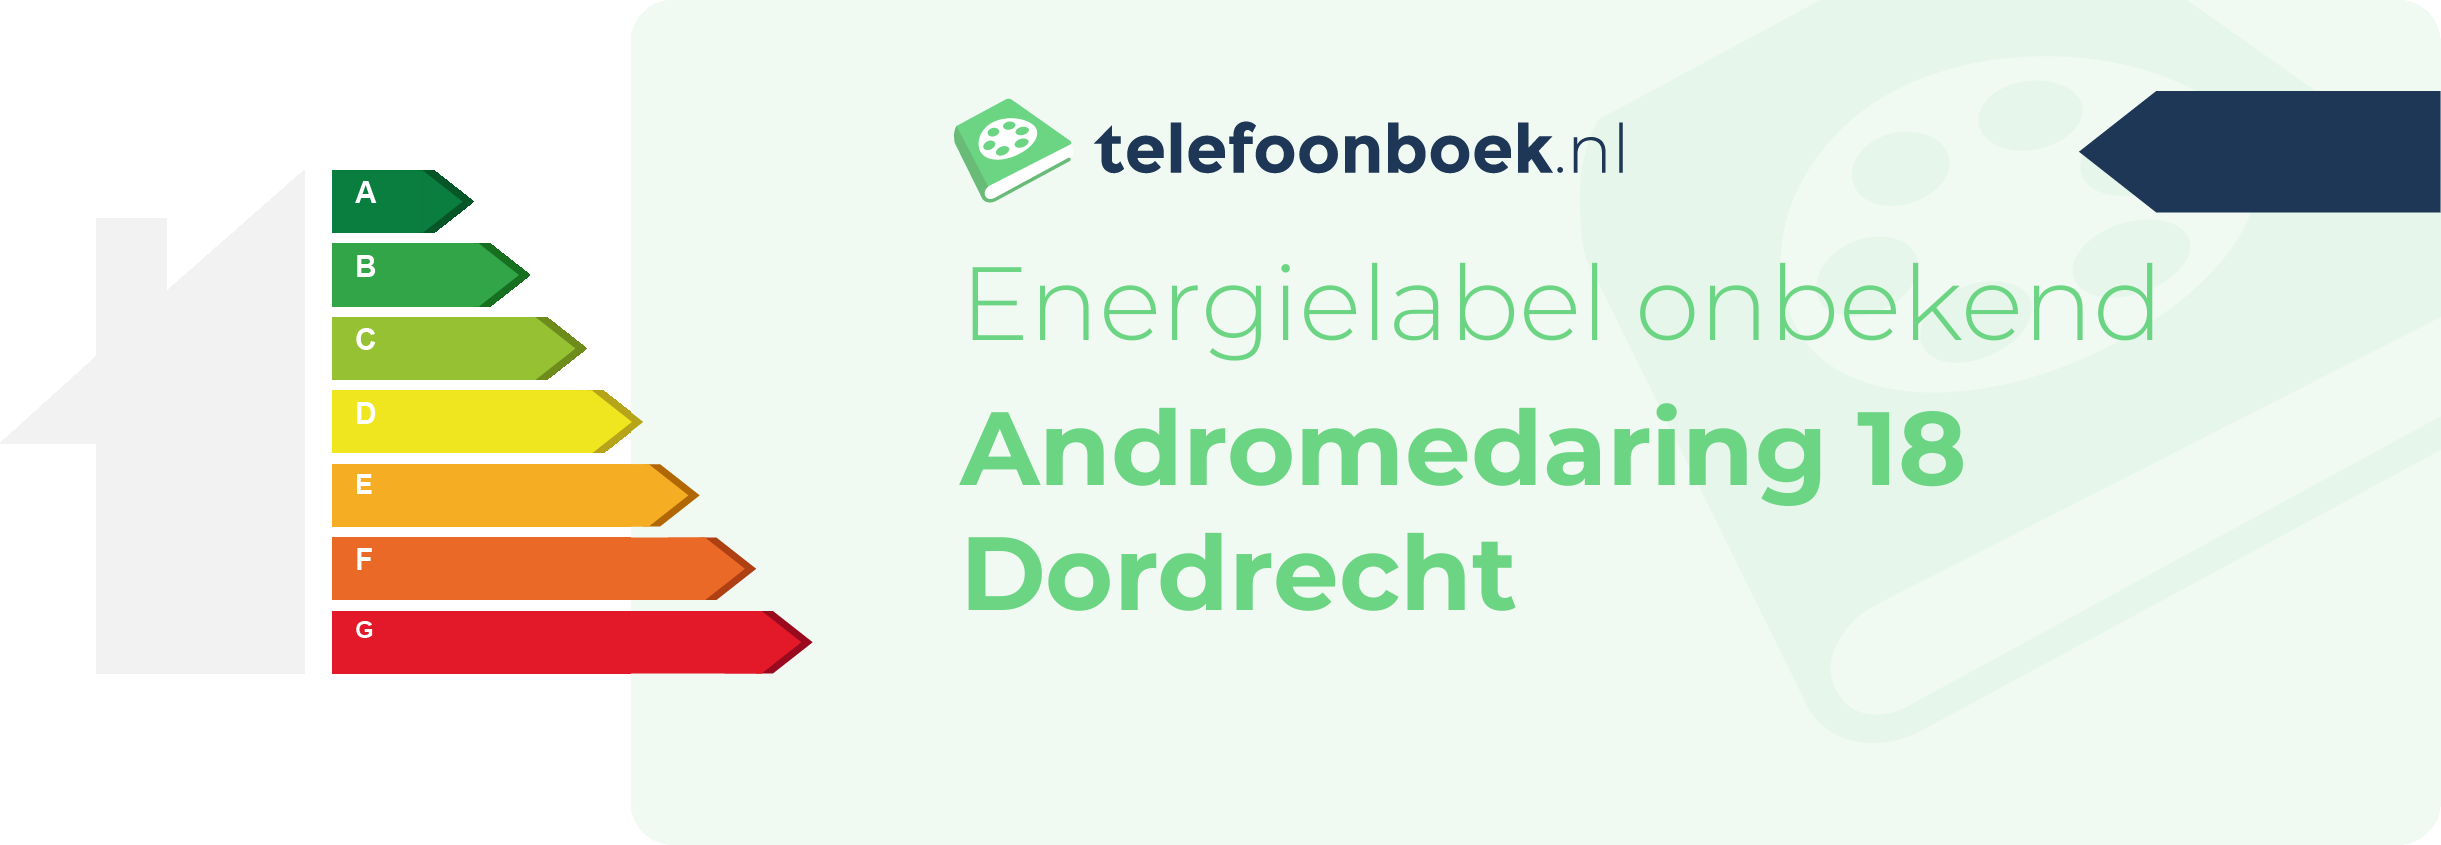 Energielabel Andromedaring 18 Dordrecht